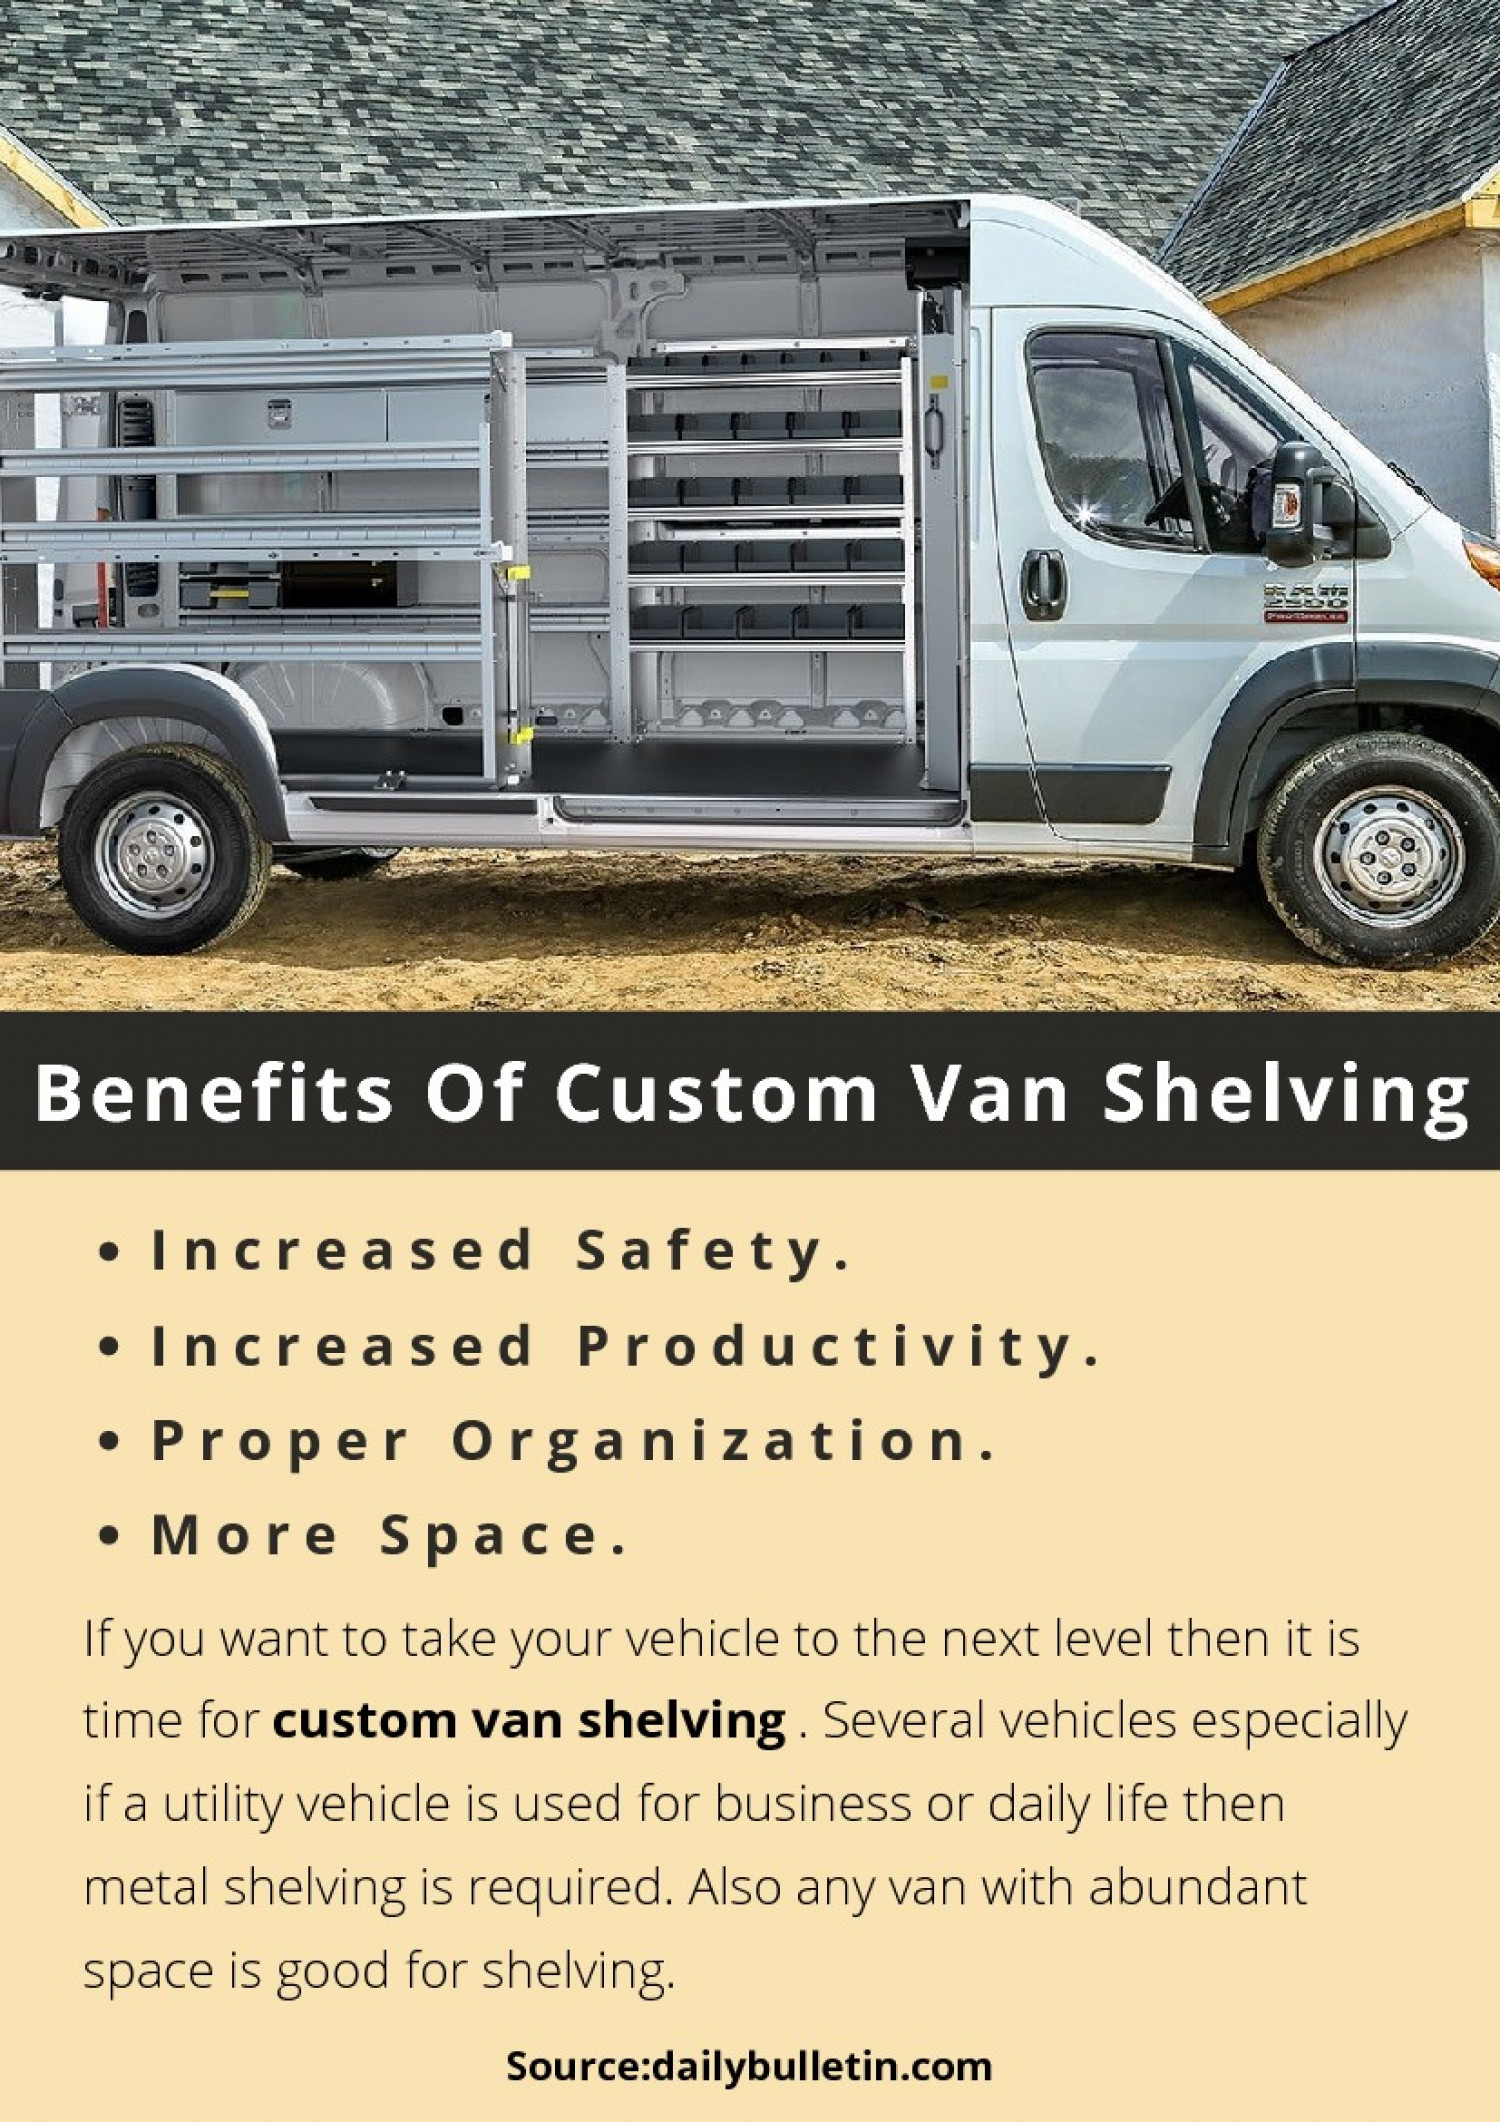 Benefits Of Custom Van Shelving Infographic